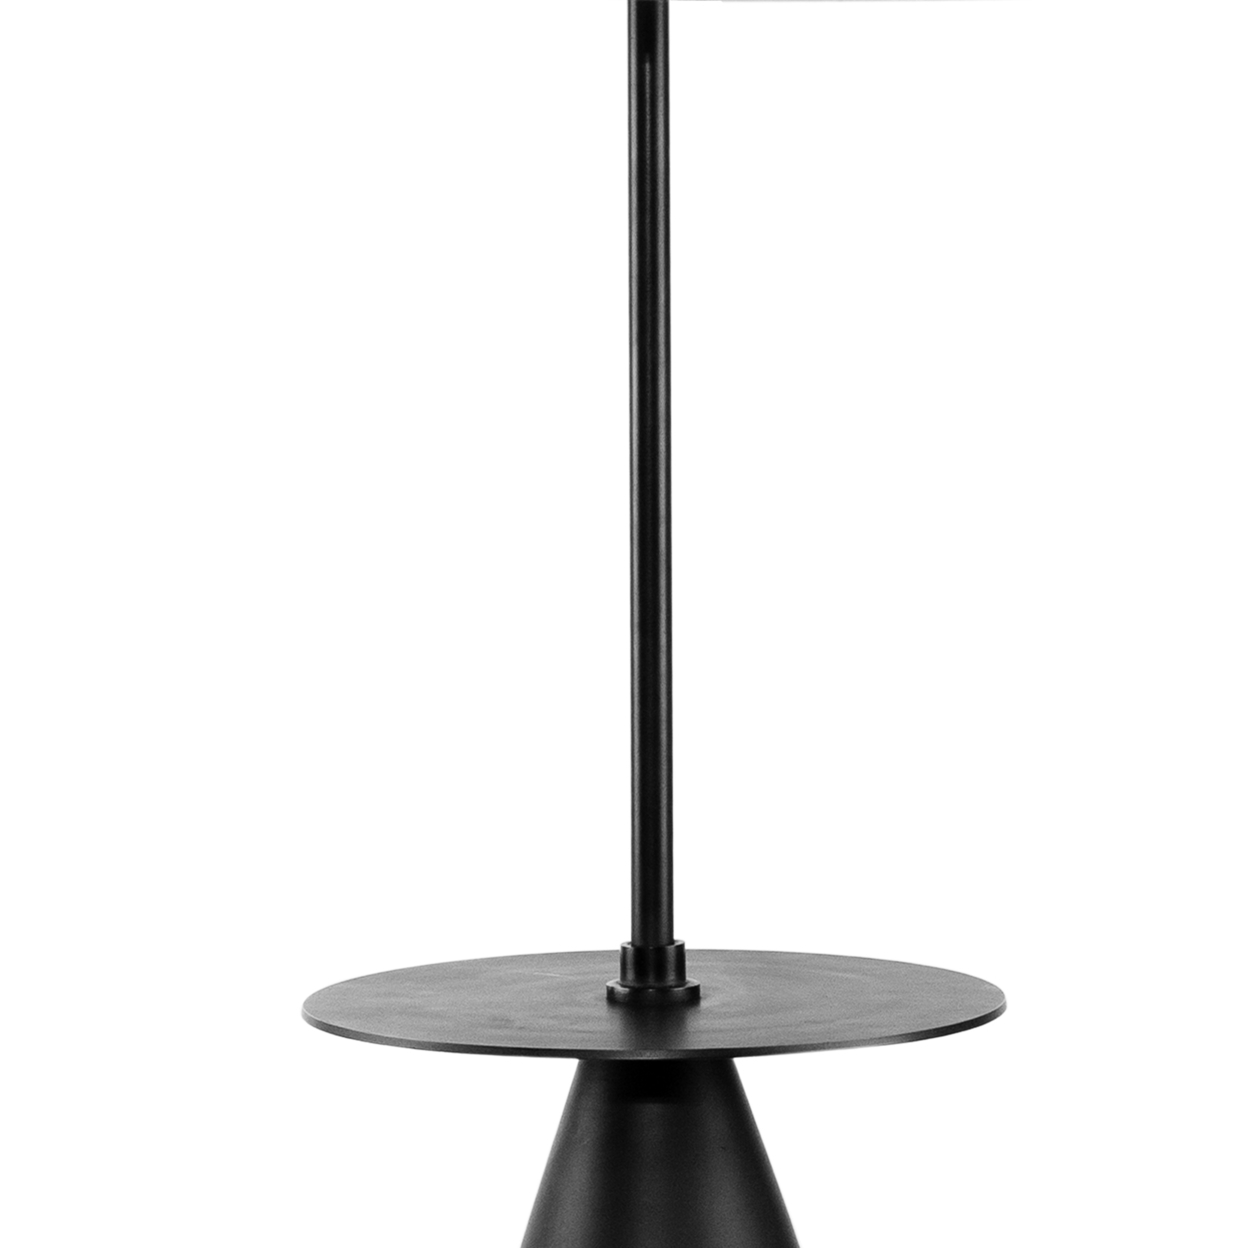 61 Inch Modern Floor Lamp, Round Drum Shade, Aluminum Frame, White, Black, Saltoro Sherpi